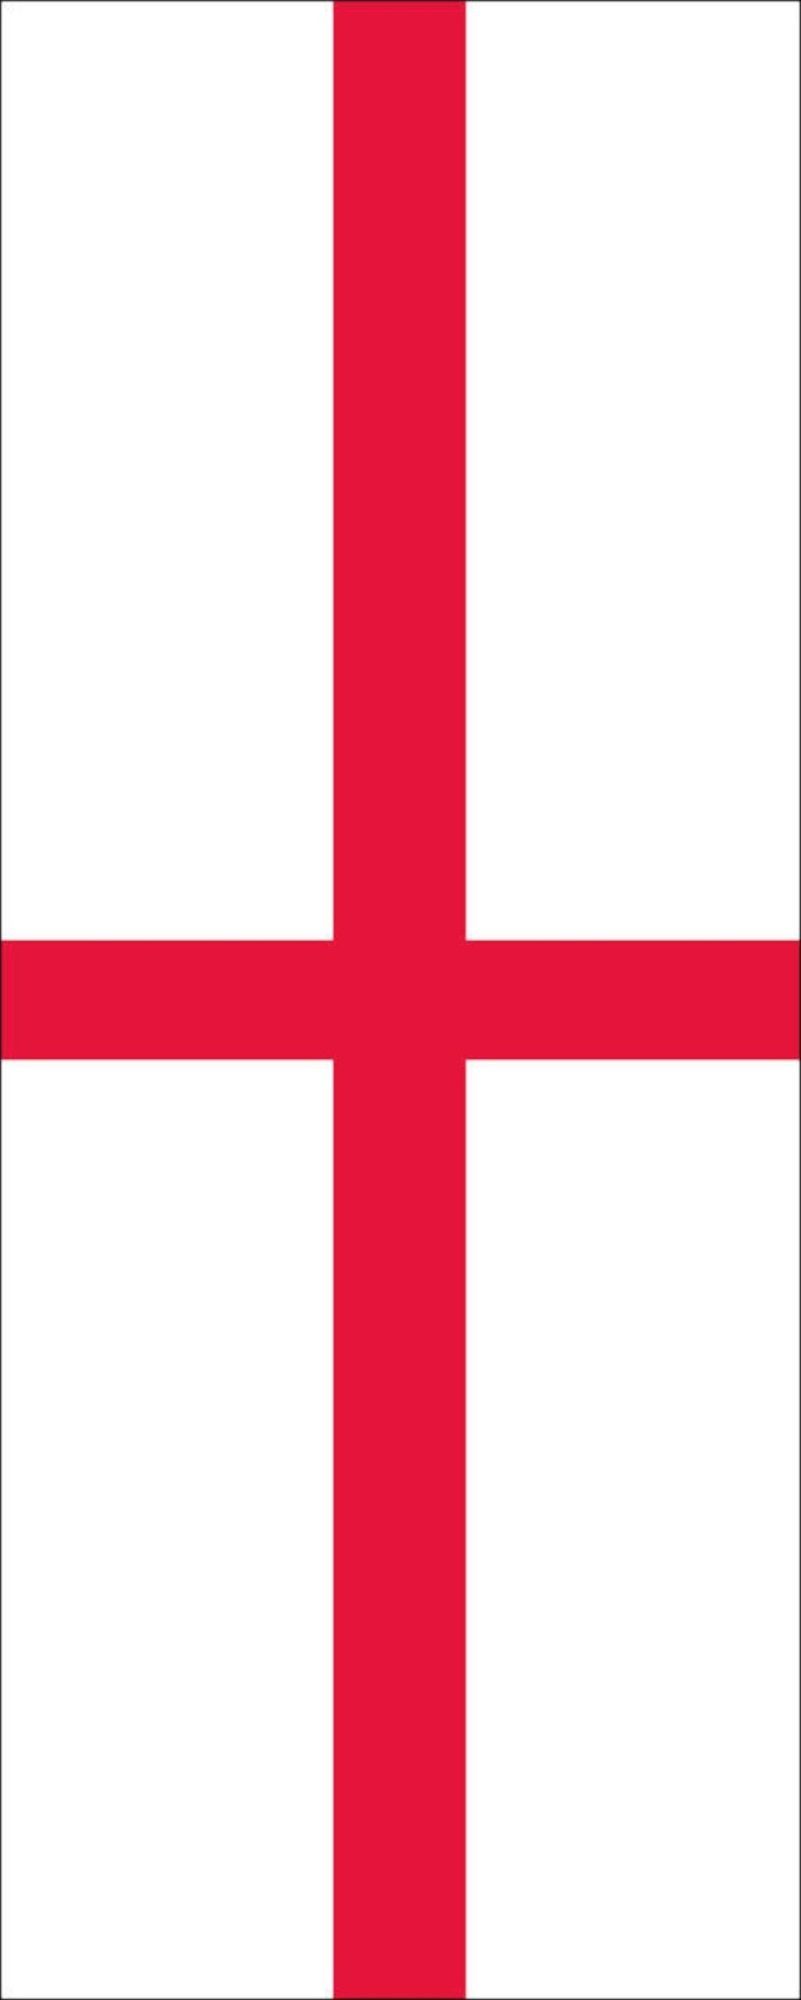 England 160 flaggenmeer Flagge Hochformat g/m²